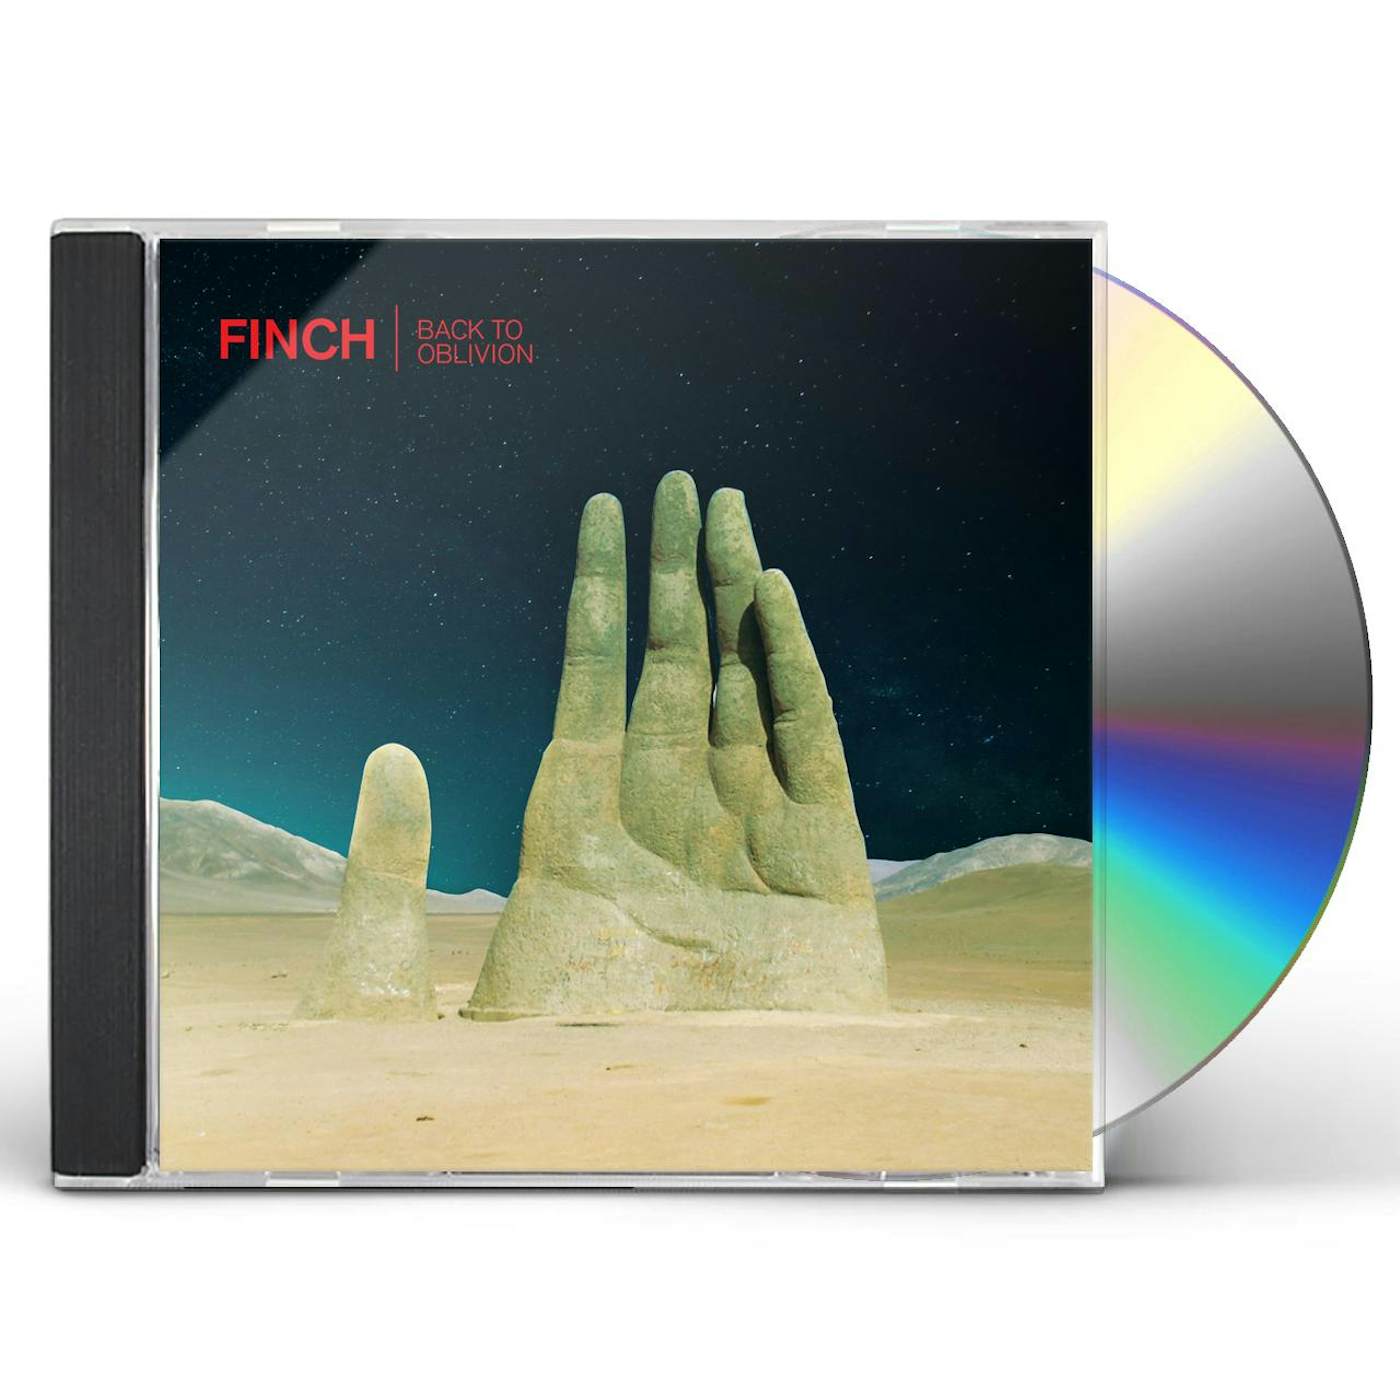 Finch BACK TO OBLIVION CD